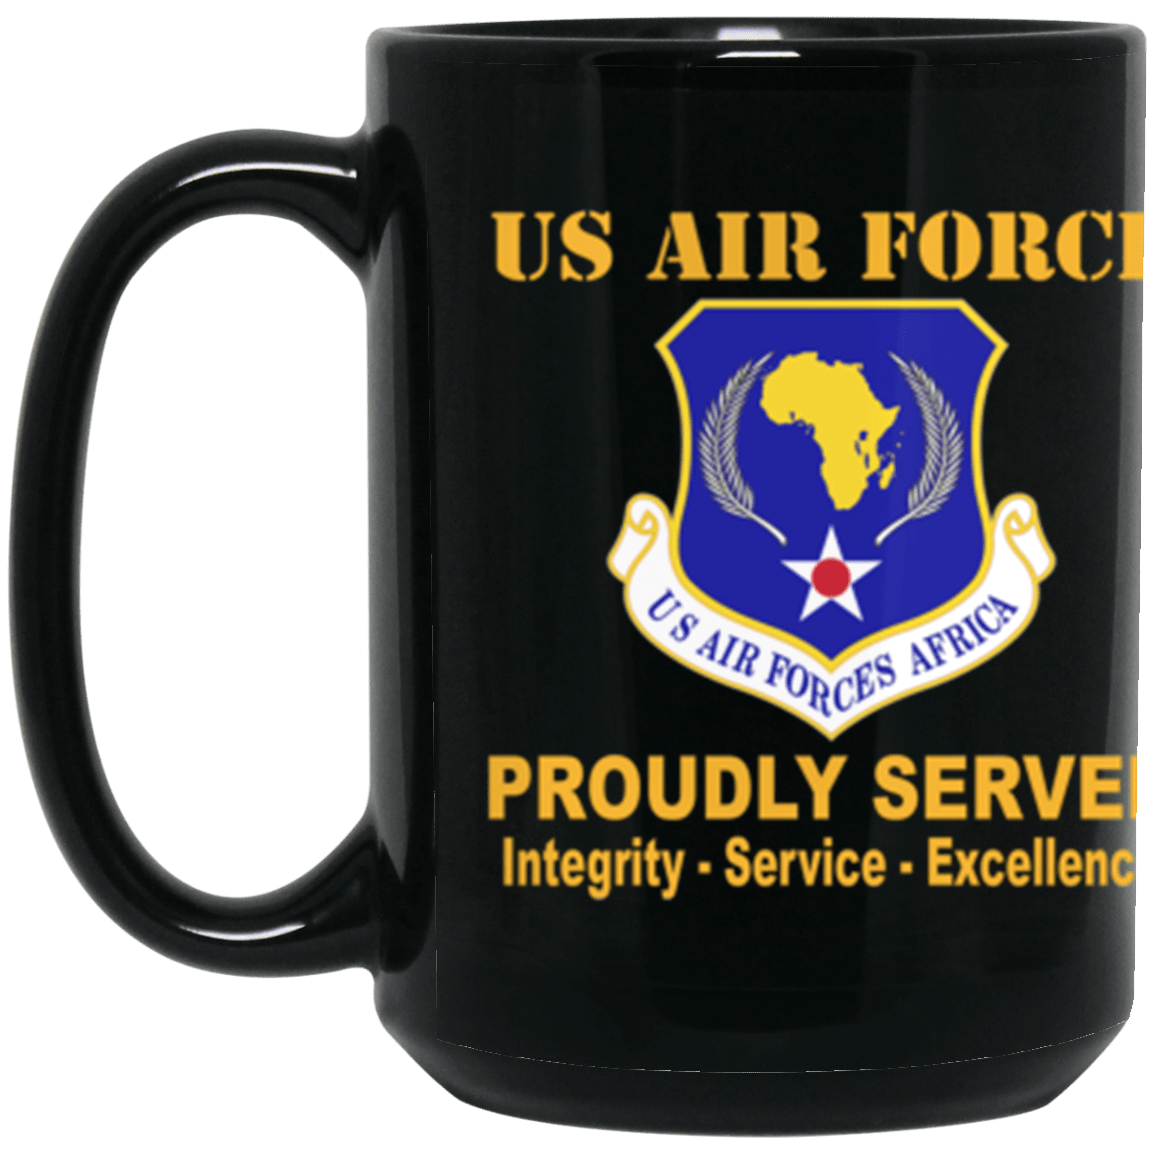 US Air Force District of Washington Proudly Served Core Values 15 oz. Black Mug-Mug-USAF-Veterans Nation